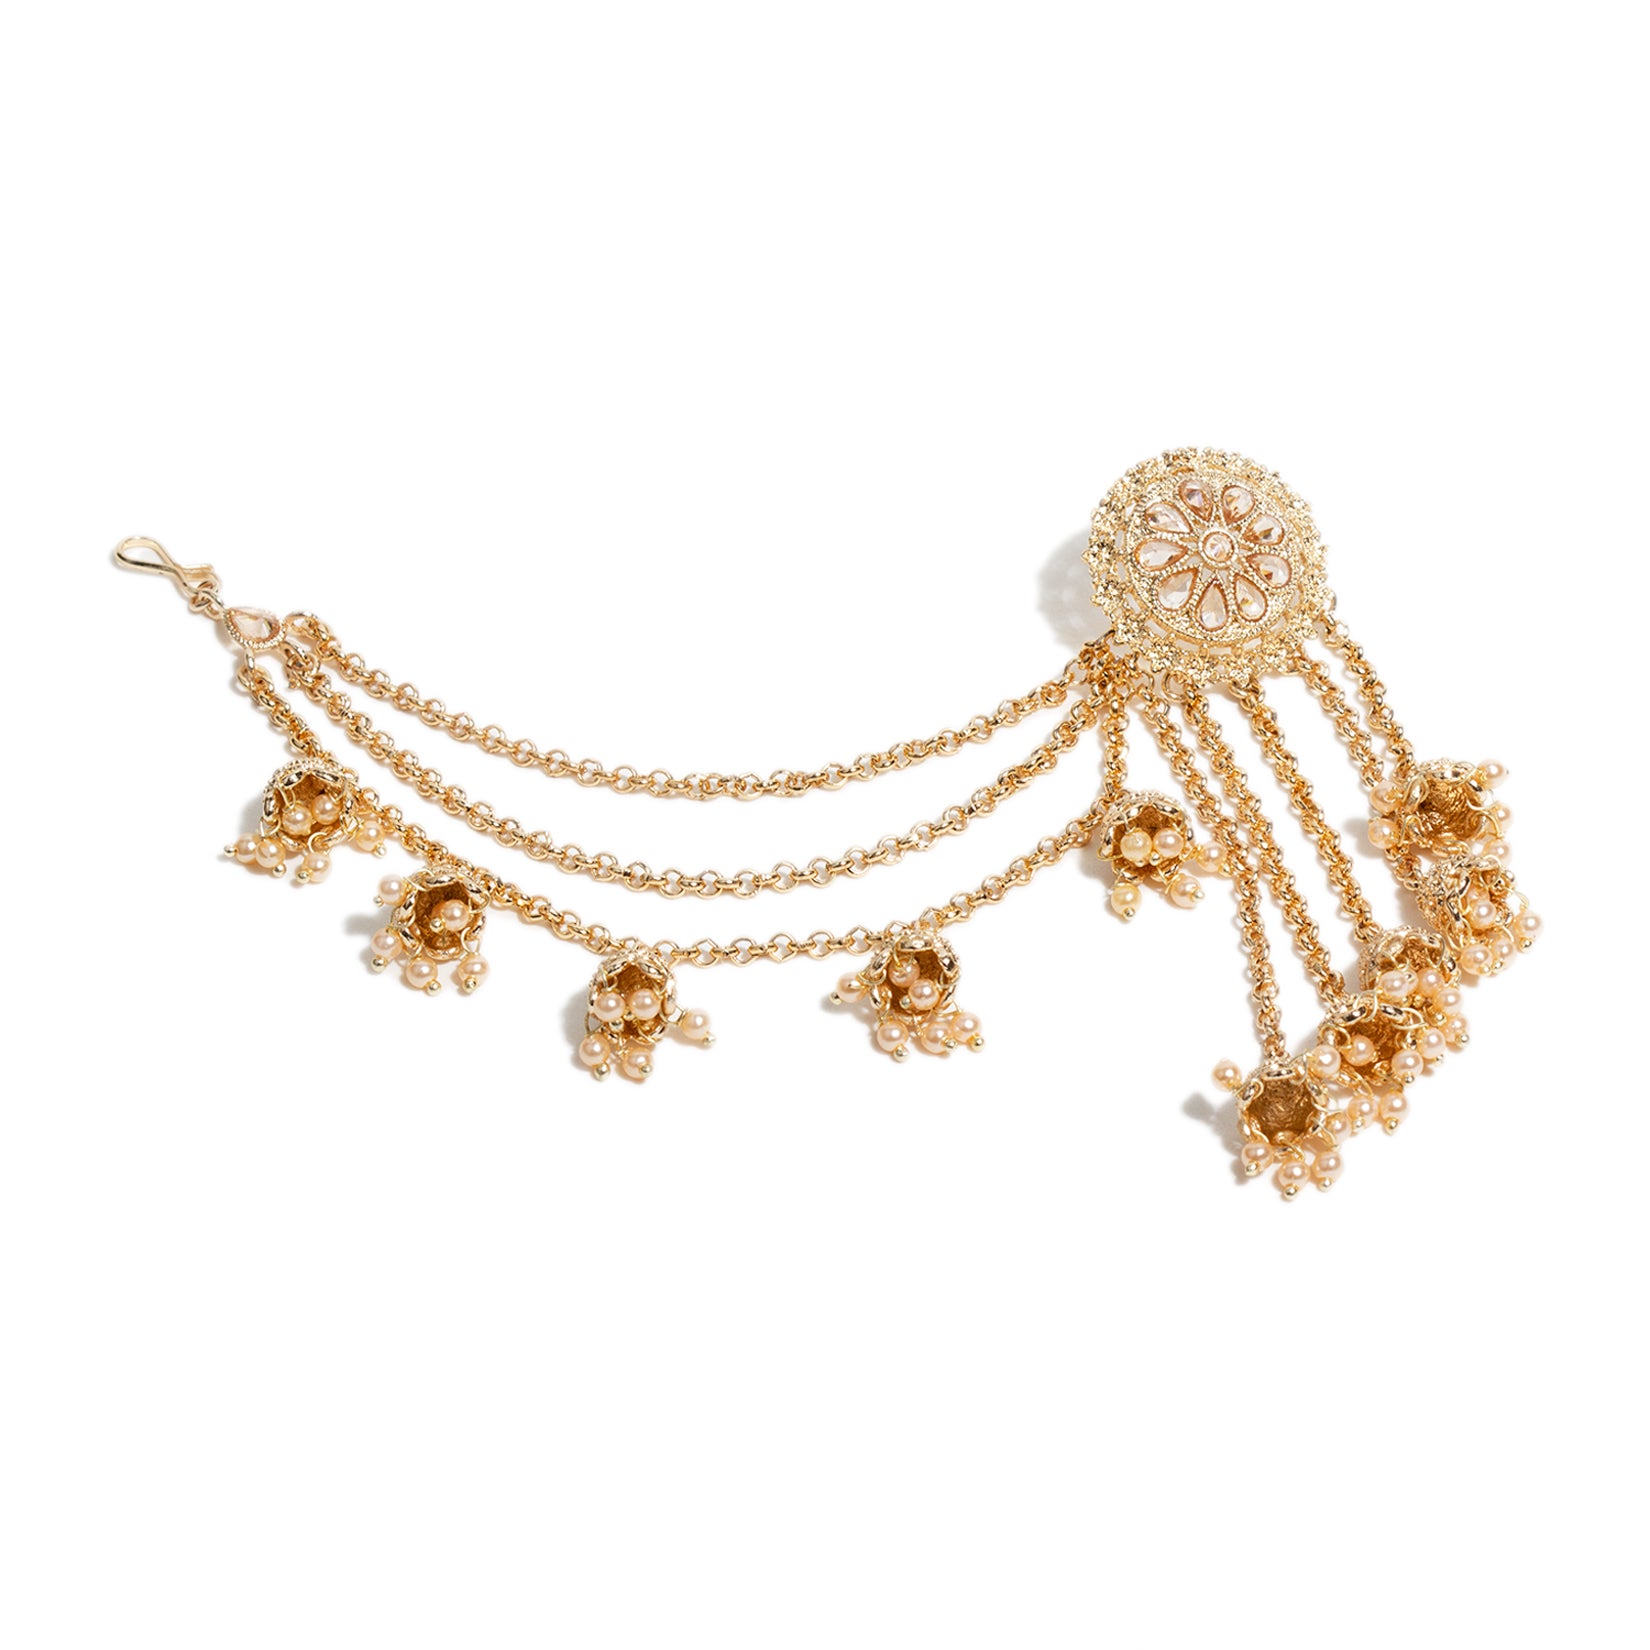 Gold Plated Kundan Jhumka Earrings With Hair Chain / Kundan Earrings /  Indian Jhumka Earrings / Indian Jewelry / Sabyasachi Jewelry - Etsy